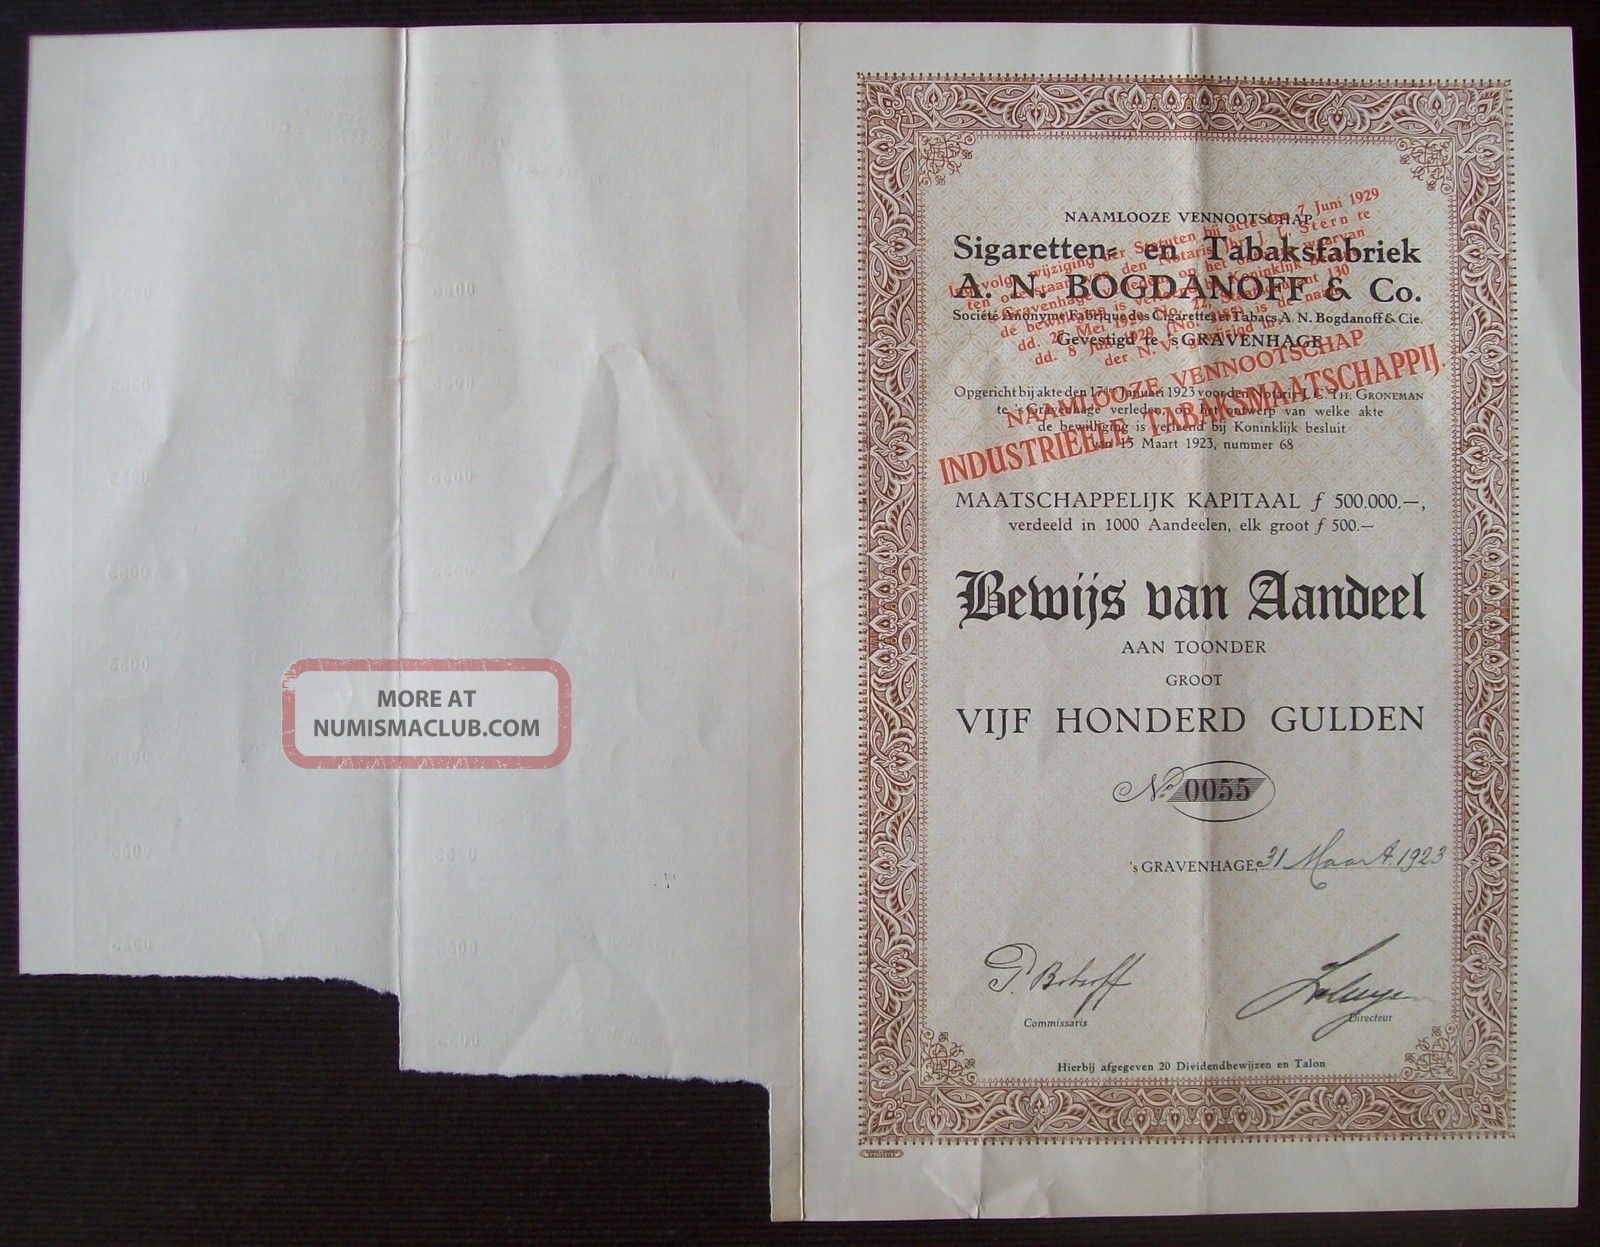 Netherlands 1923 Bond With Coupons Bogdanoff Tabaksfabriek St - Gravenhage.  R4024 World photo